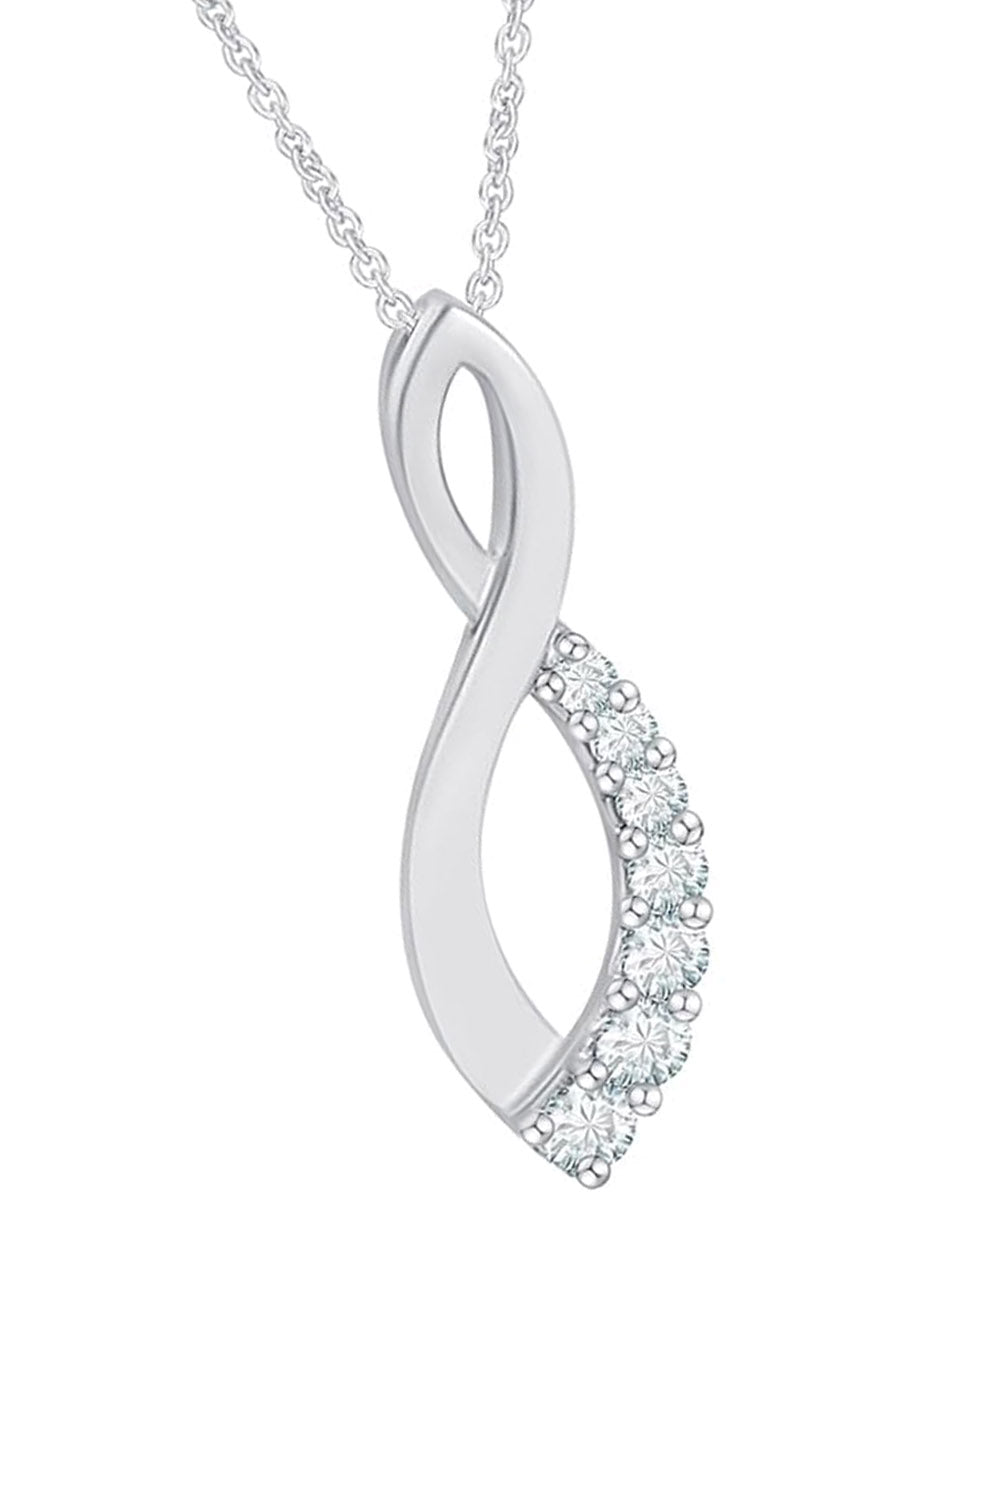 White Gold Color Diamond Infinity Pendant Necklace